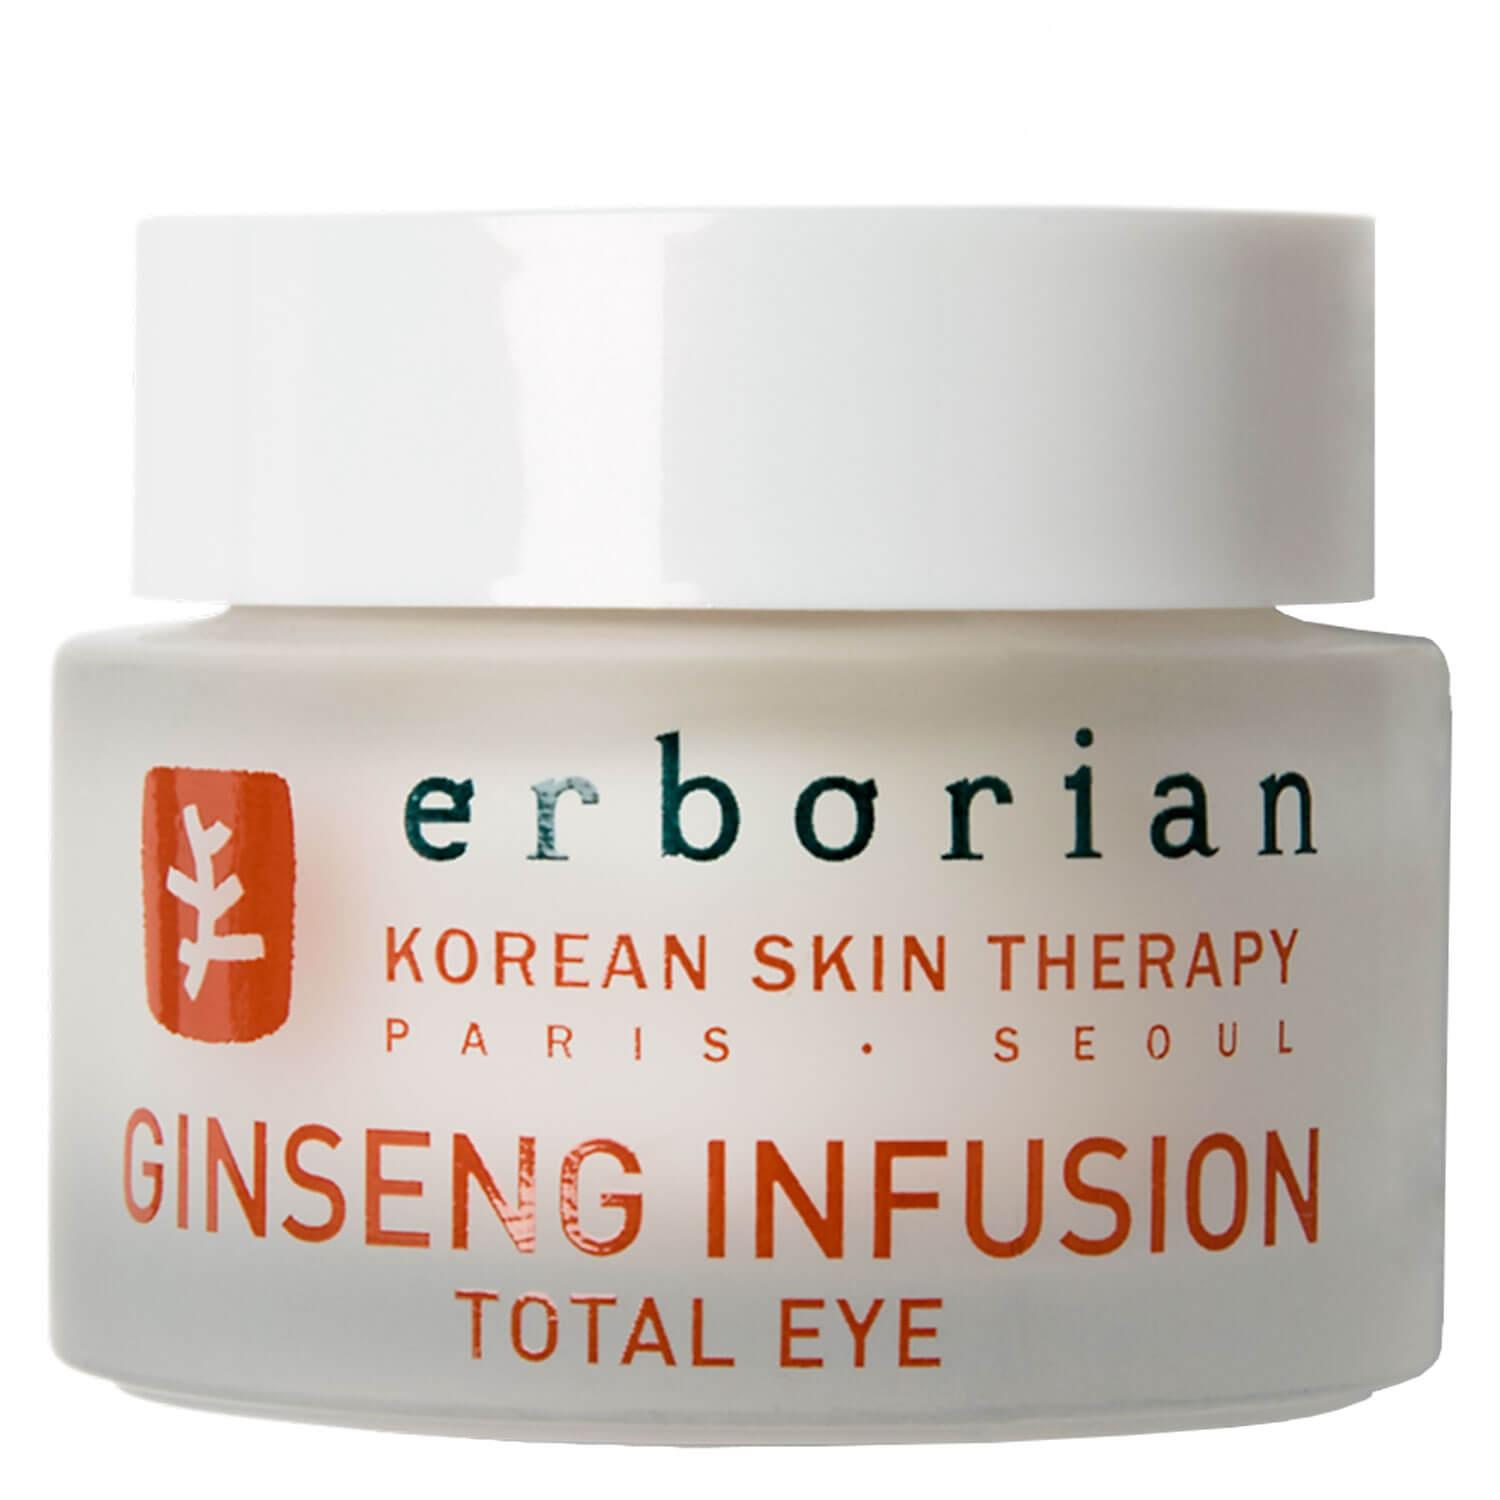 Ginseng - Infusion Total Eye